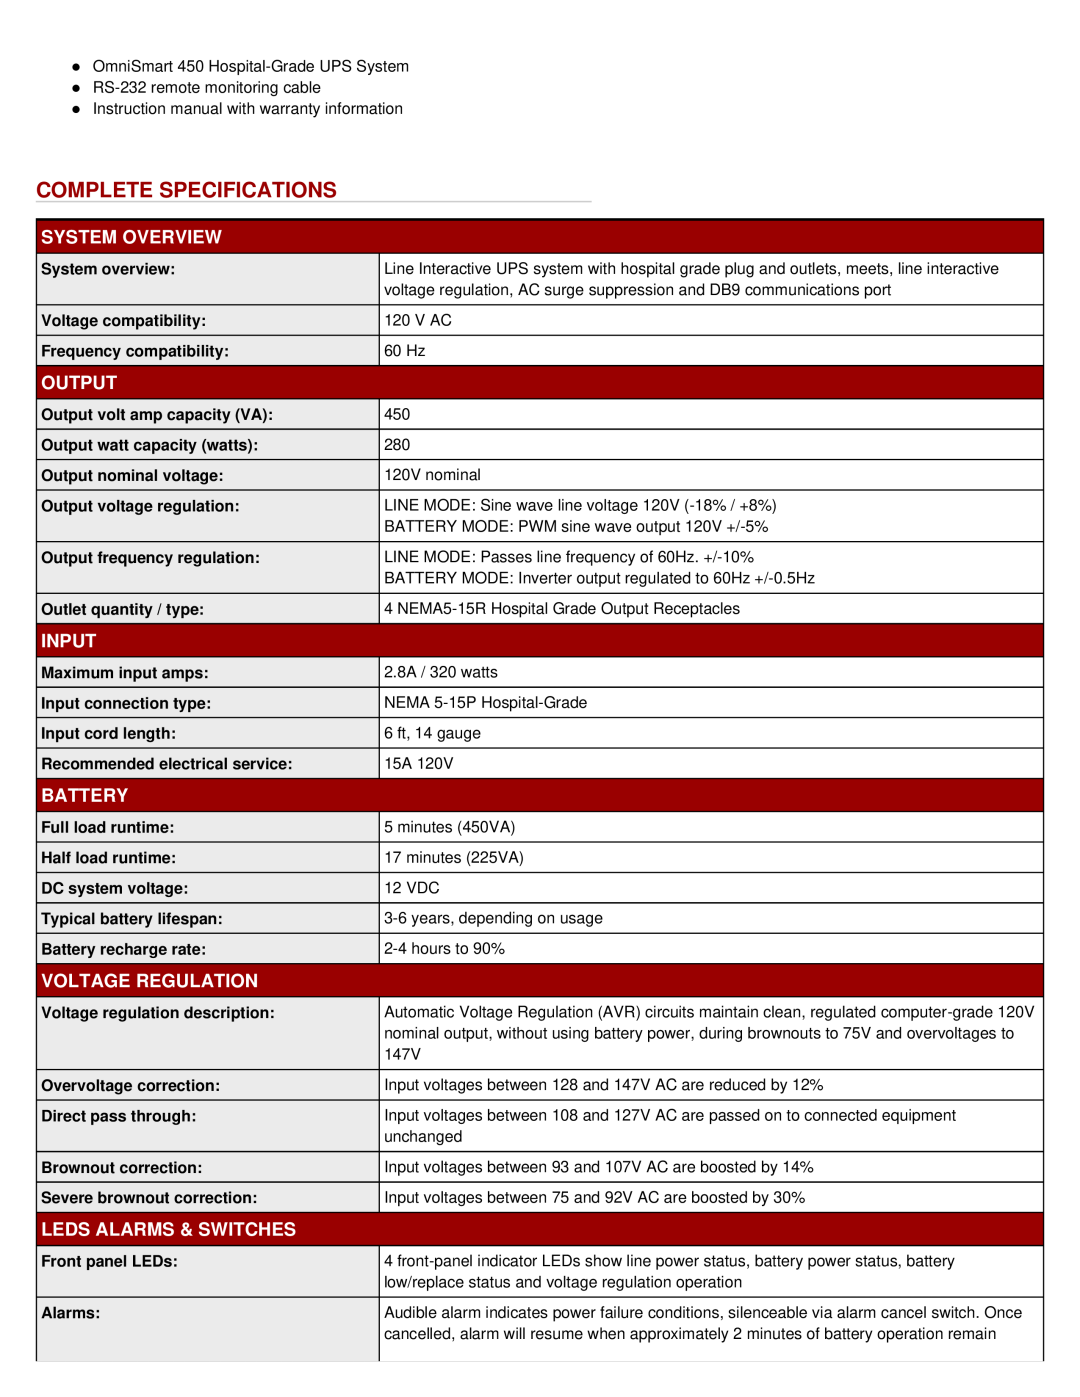 Tripp Lite OMNISMART450HG warranty Complete Specifications, System Overview, Output, Input, Battery, Voltage Regulation 